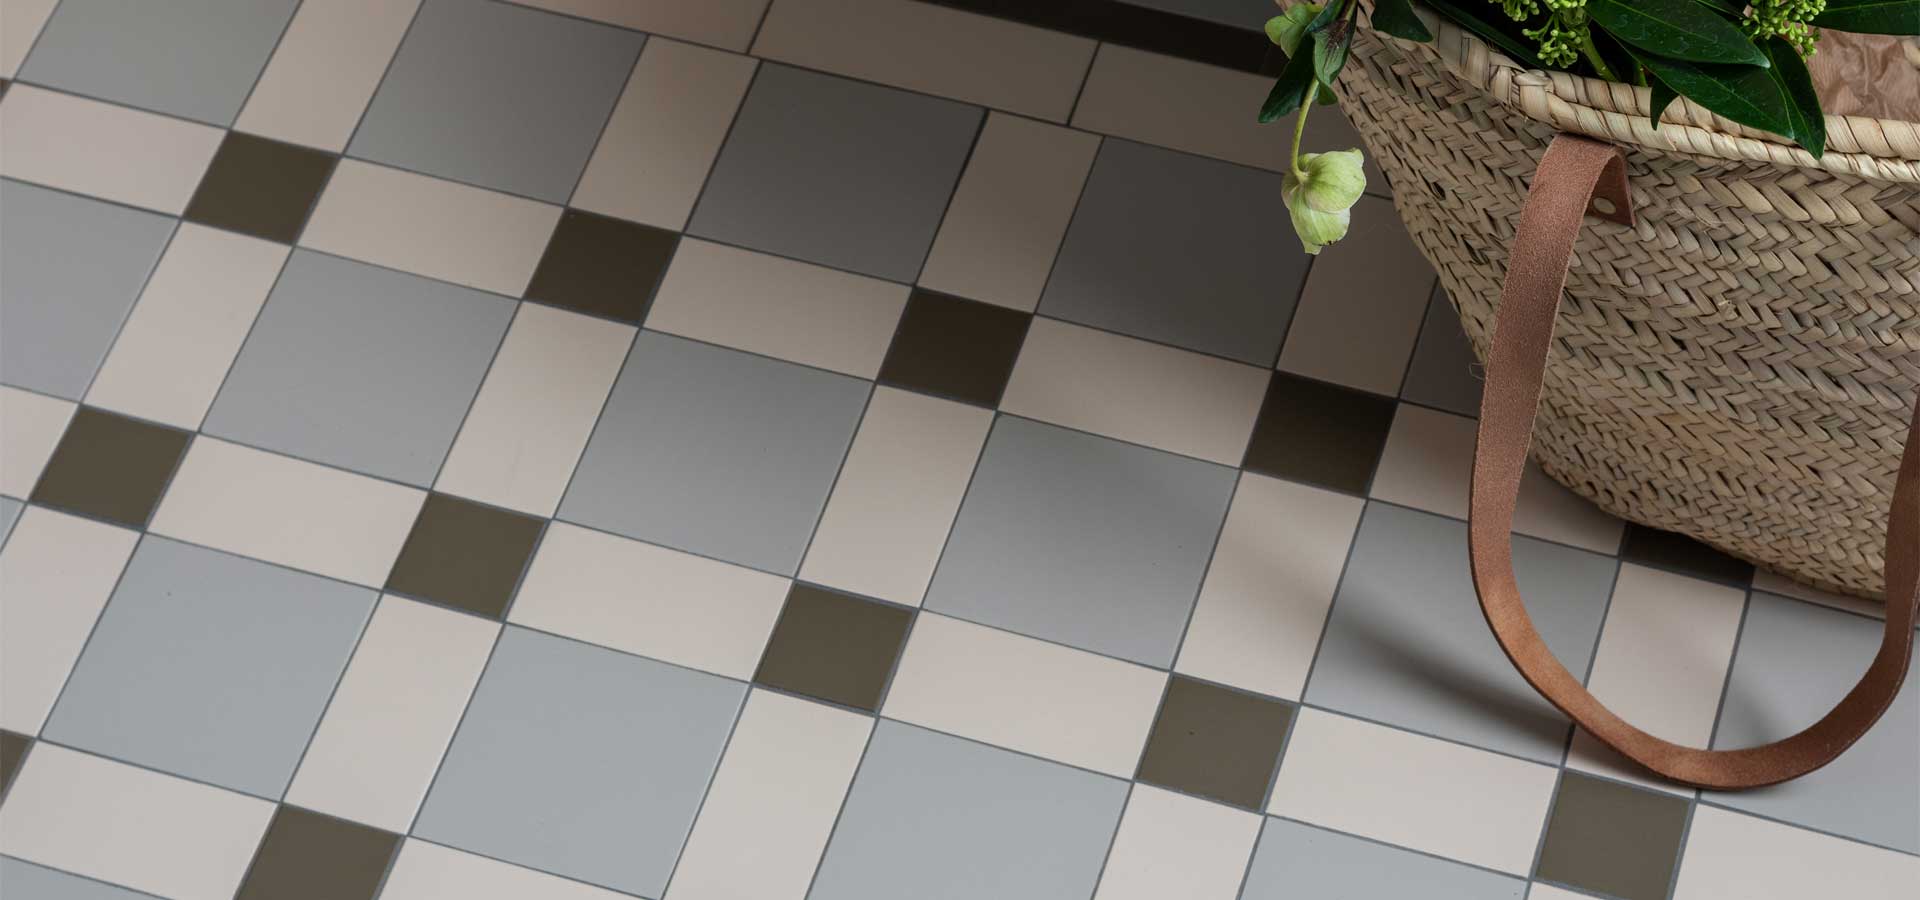 Original Style Victorian Floor Tiles - Brighton Pattern in Grey, White and Green Slider